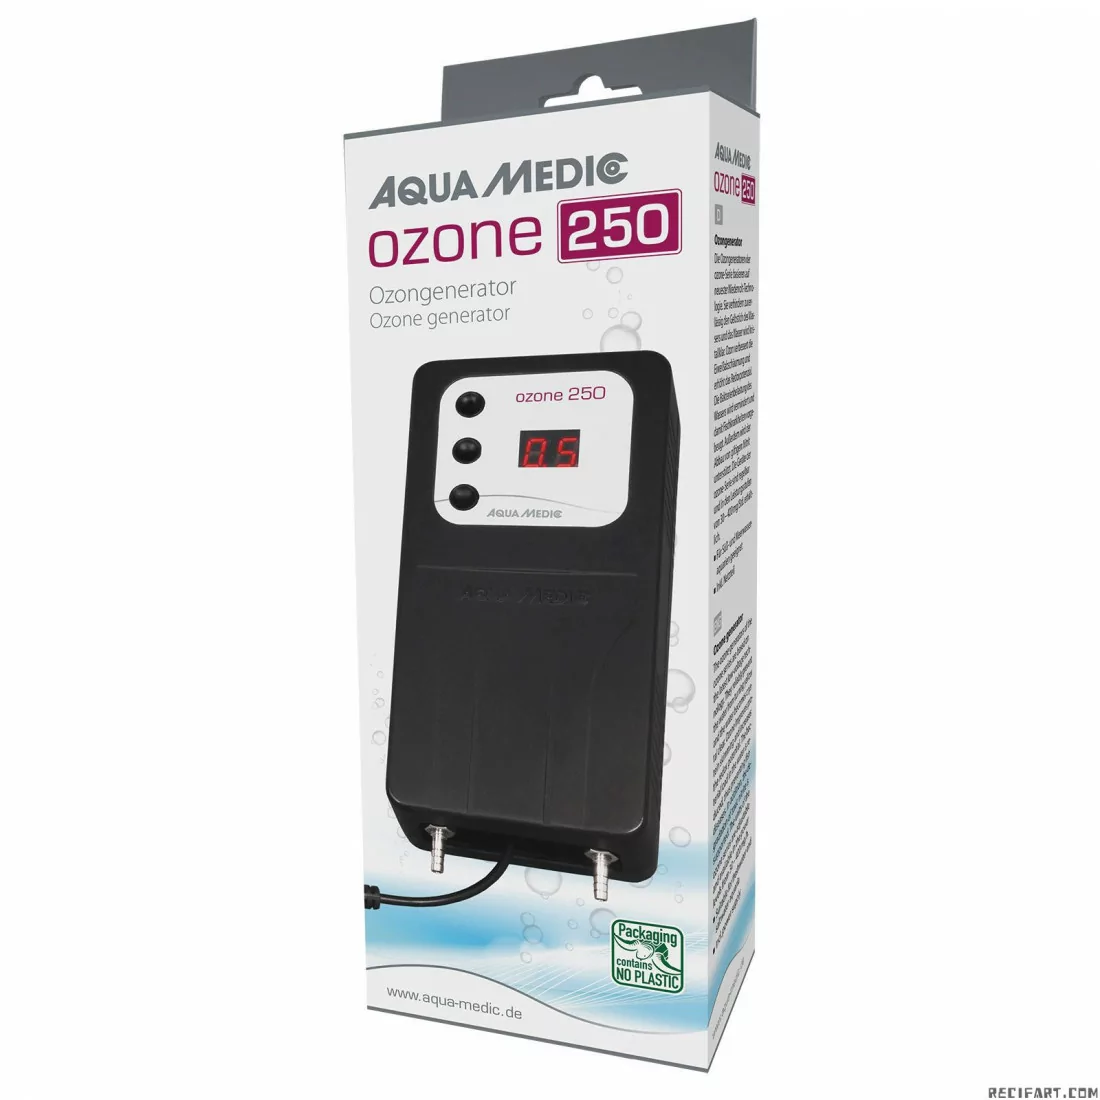 Ozone 250